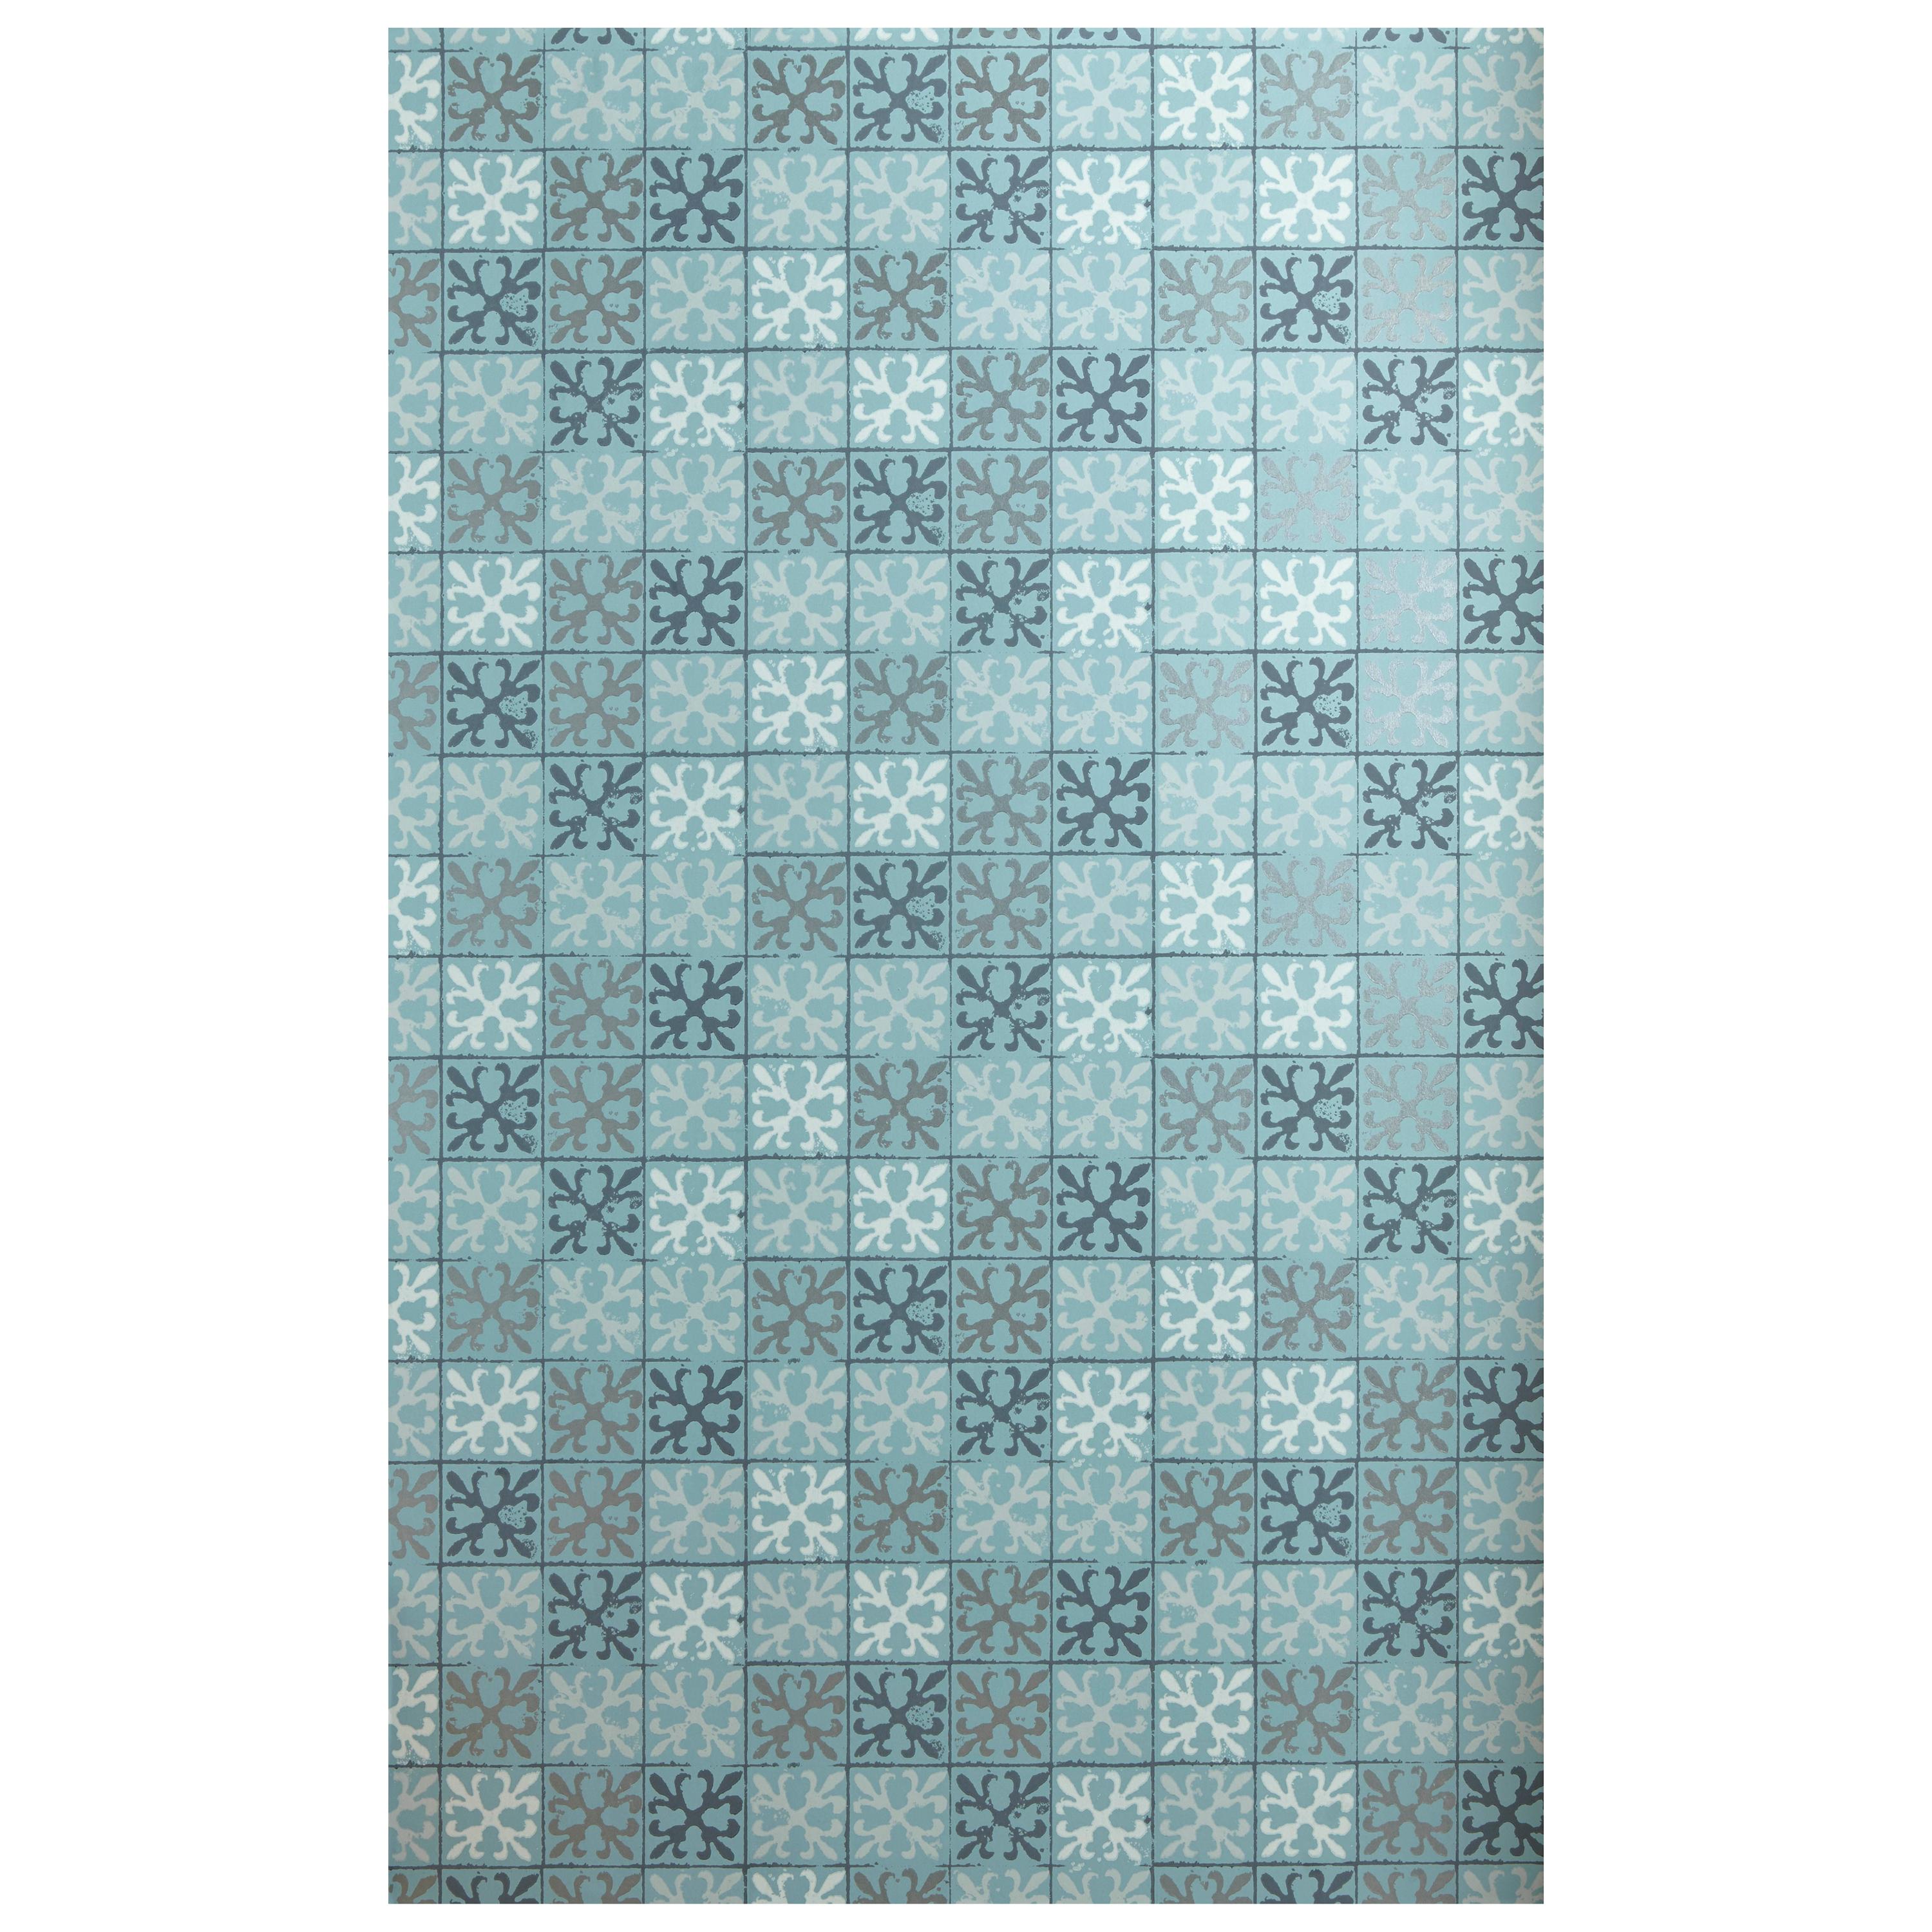 'Fleur-de-Lys Tile' Contemporary, Traditional Wallpaper in Canteen Blue For Sale